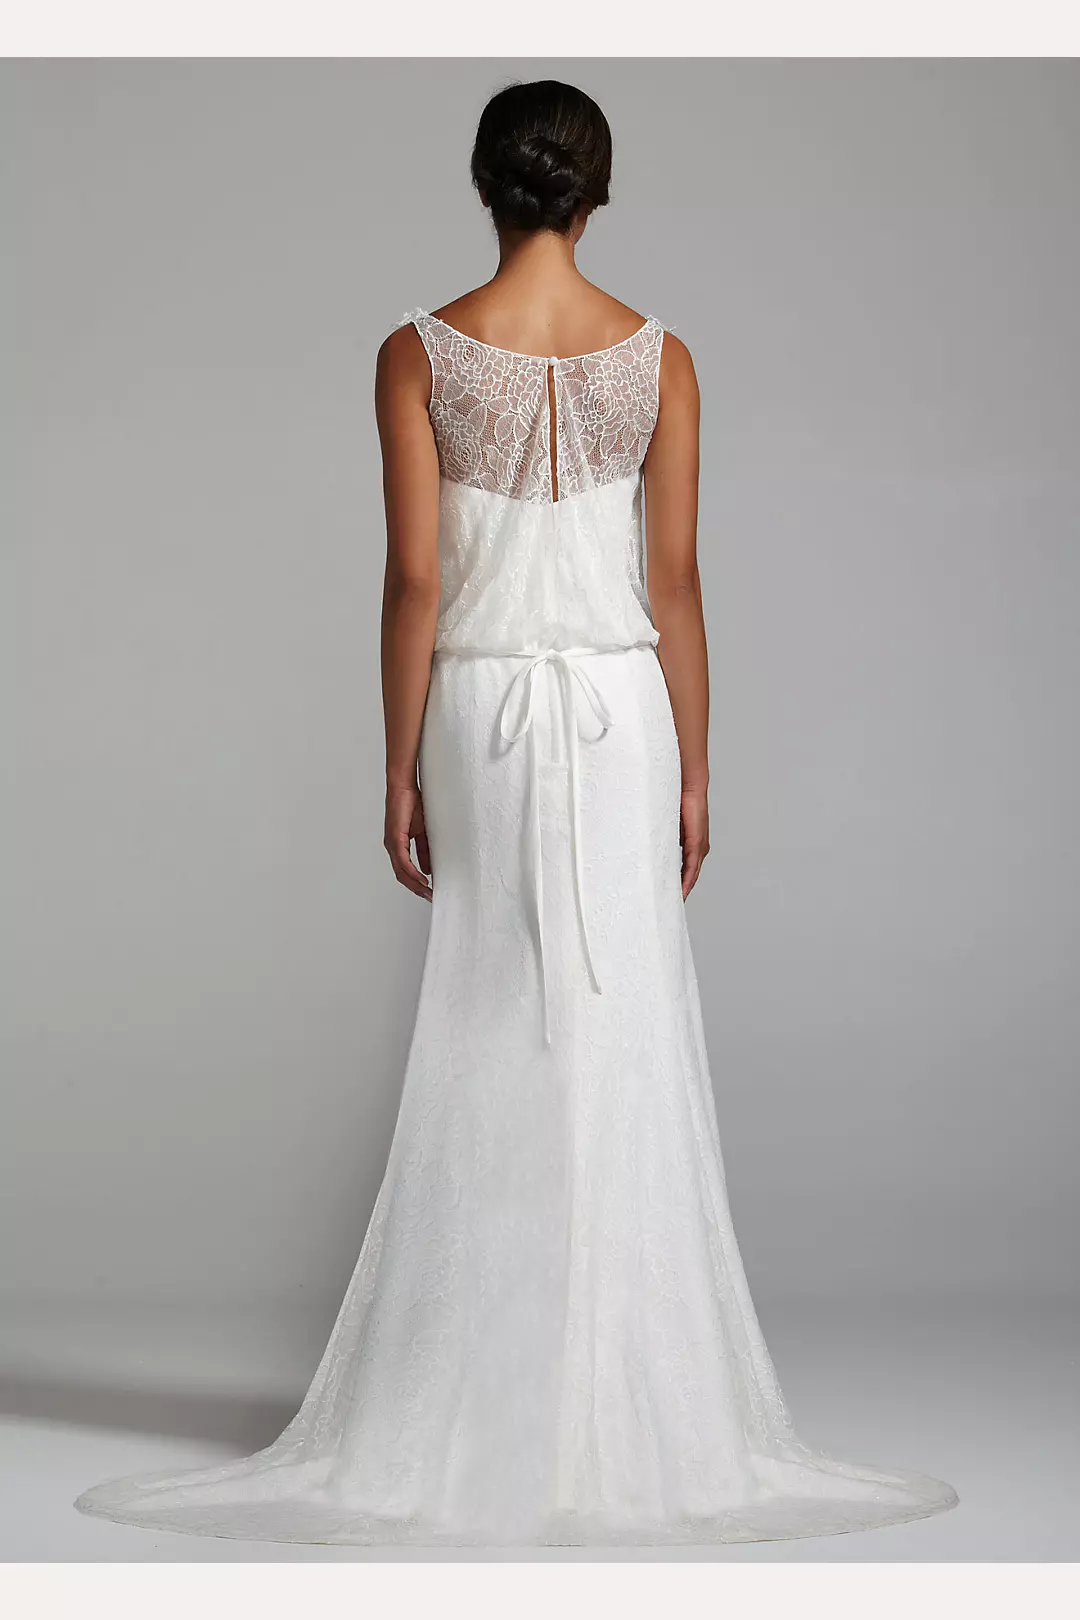 Lace Blouson Wedding Gown with 3D Floral Detail Image 2